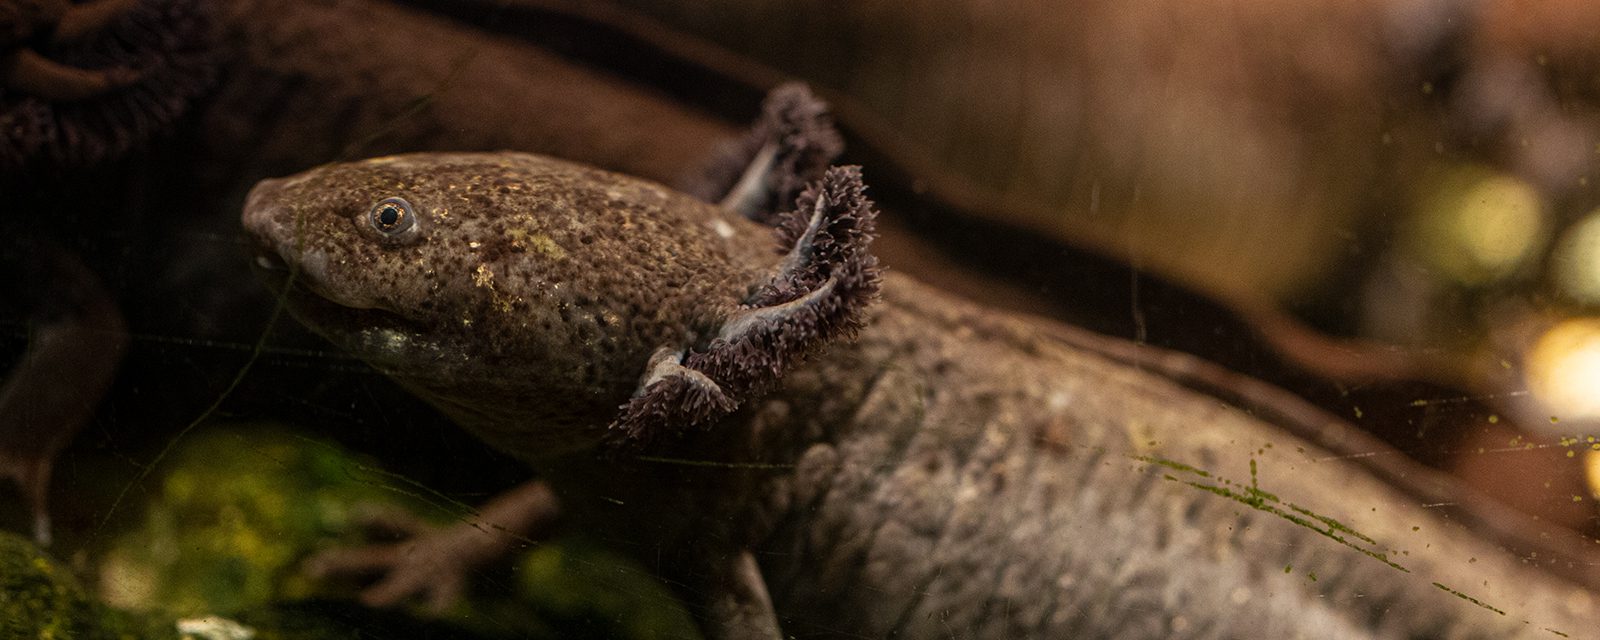 Axolotl in exhibit